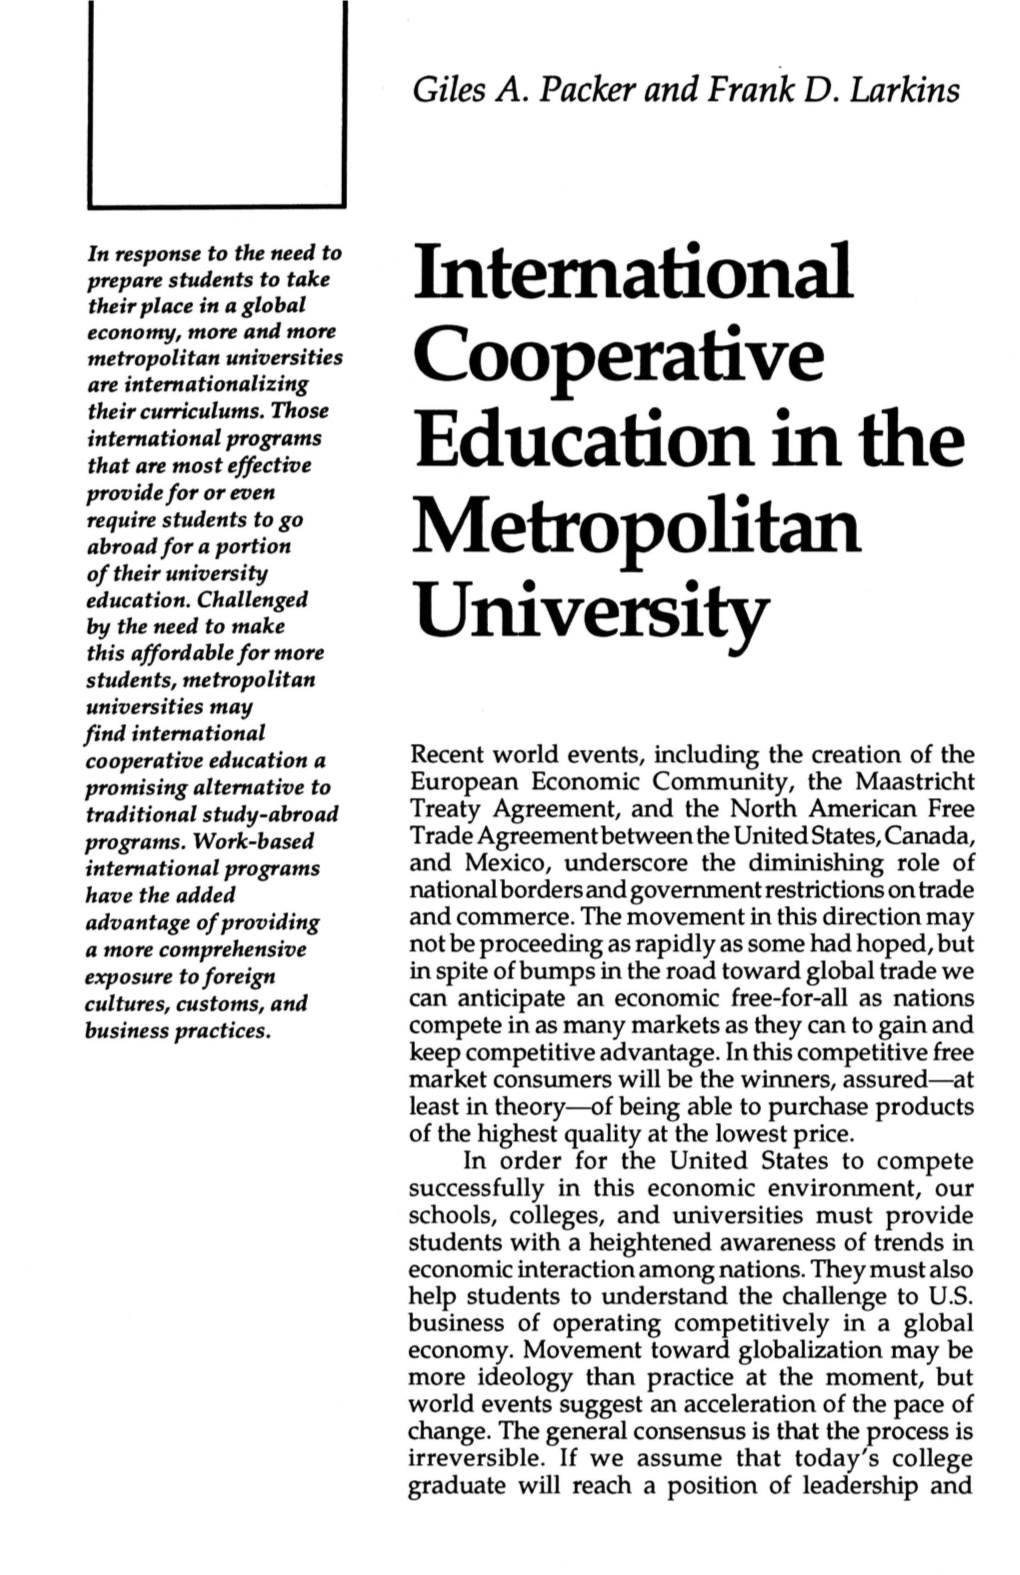 International Cooperative Education in the Metropolitan University